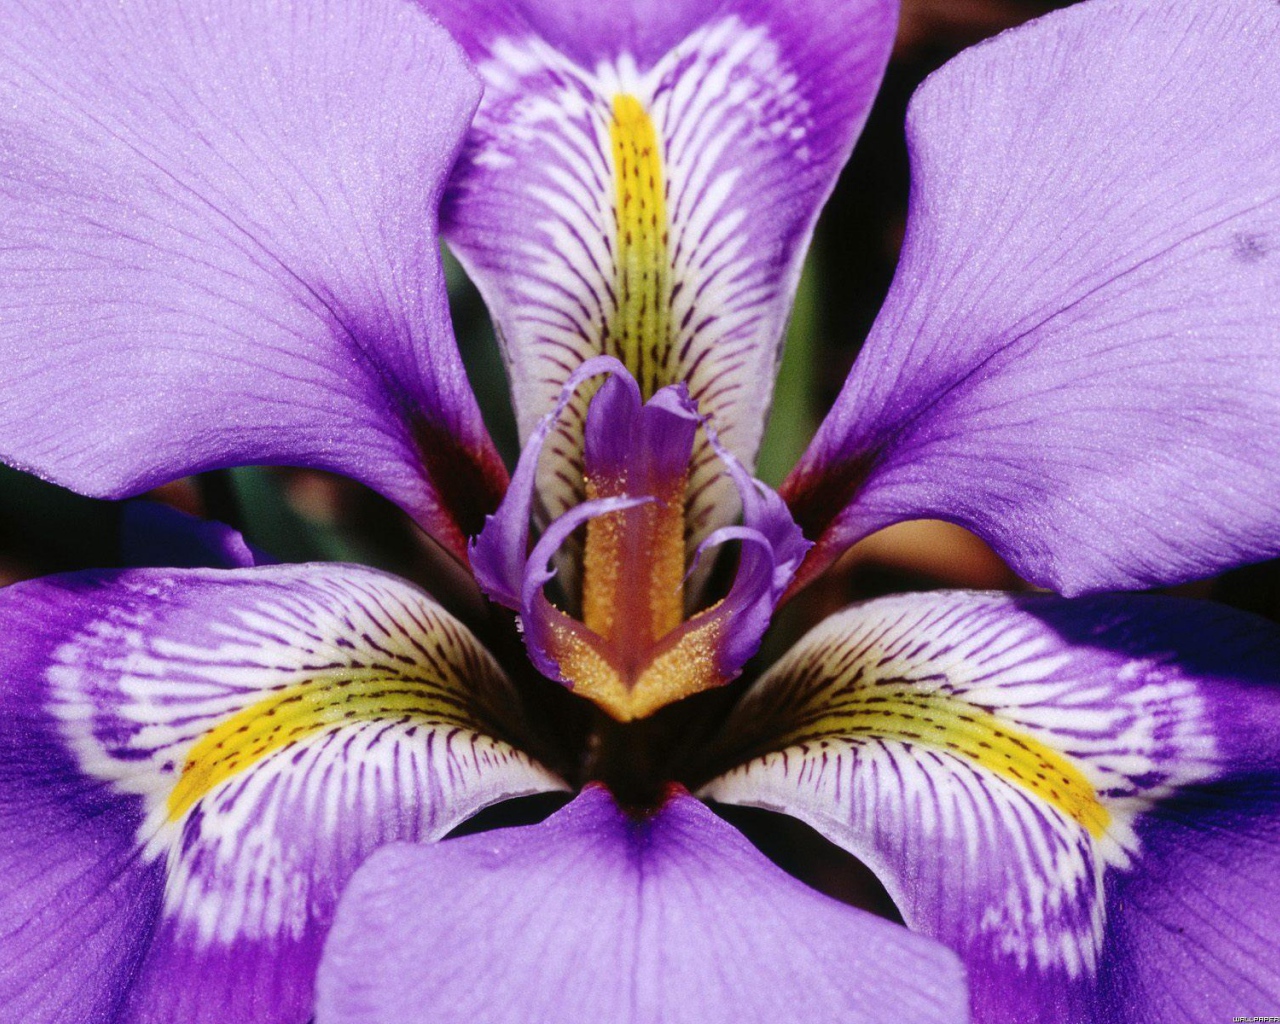 Iris flower petals